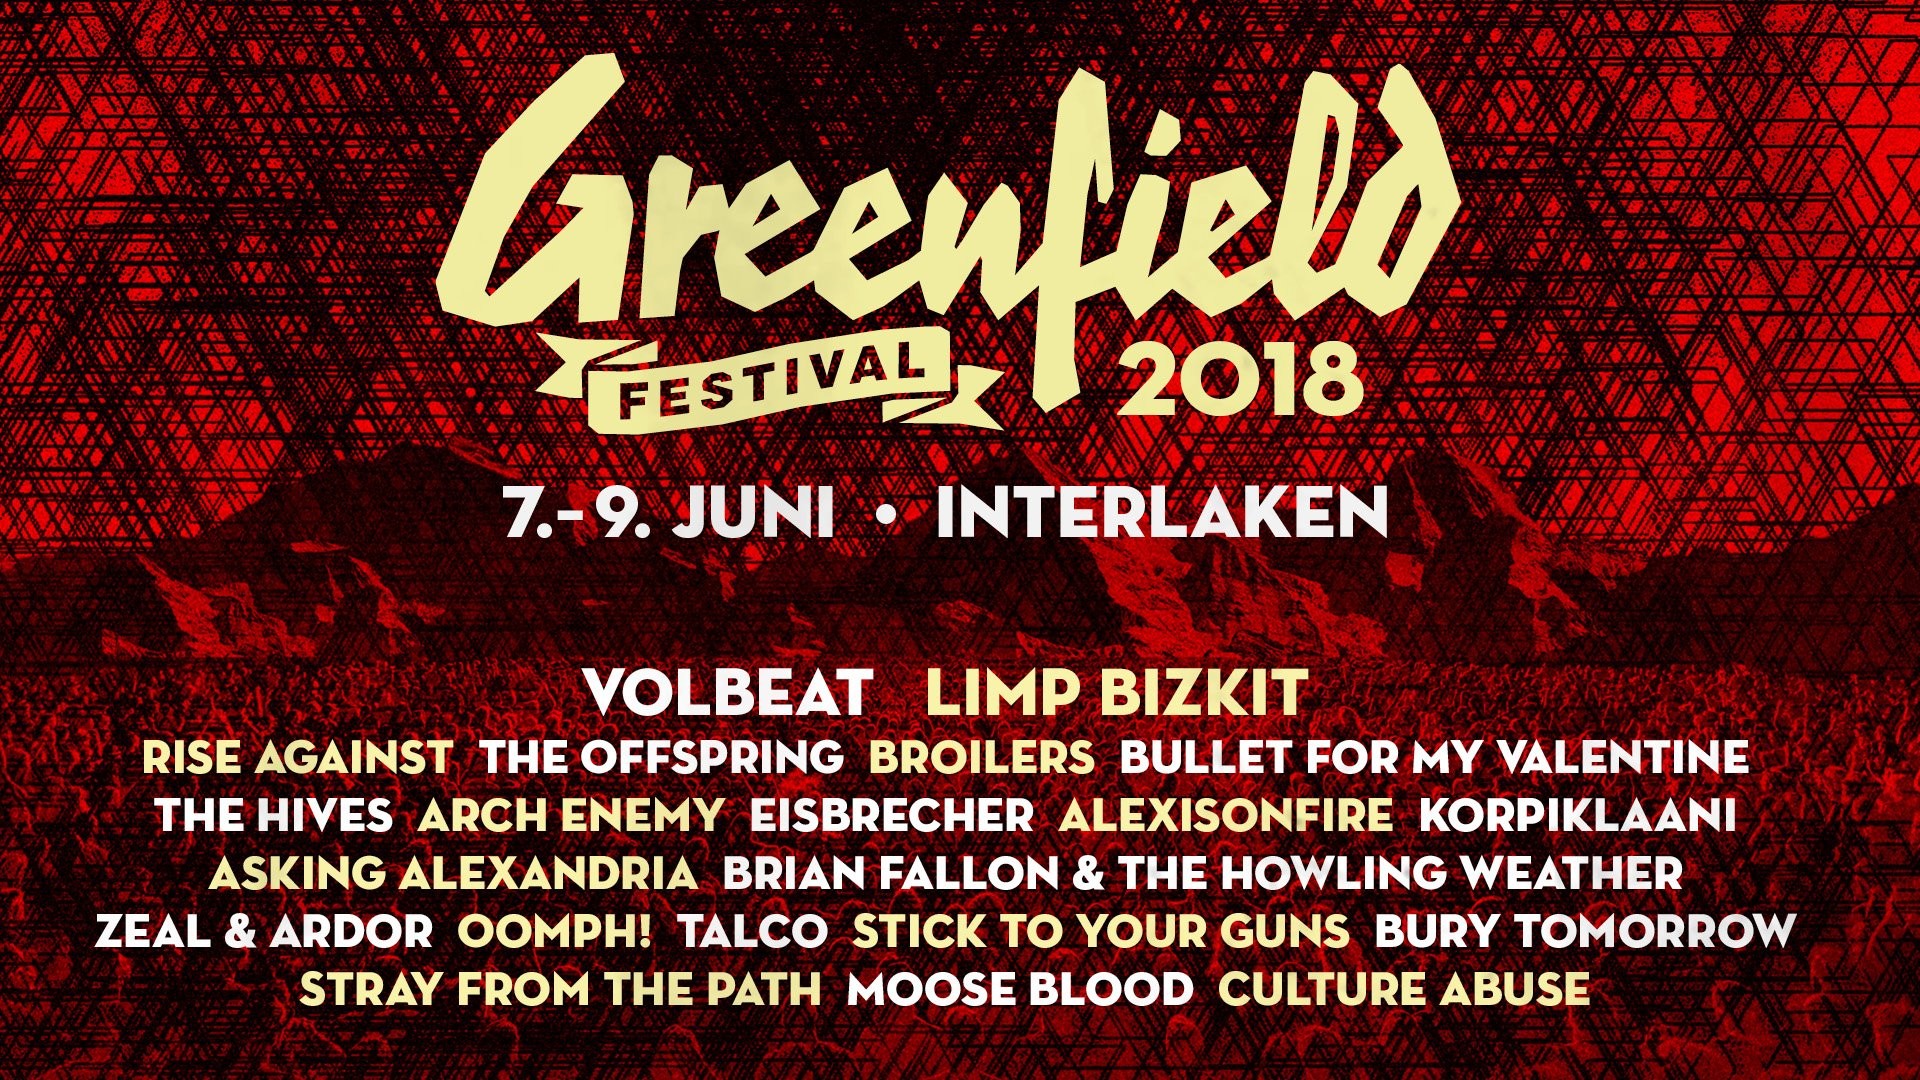 1920x1080 Greenfield Festival 2018 - Volbeat, Arch Enemy, Limp Bizkit, The Offspring  - Metalinside